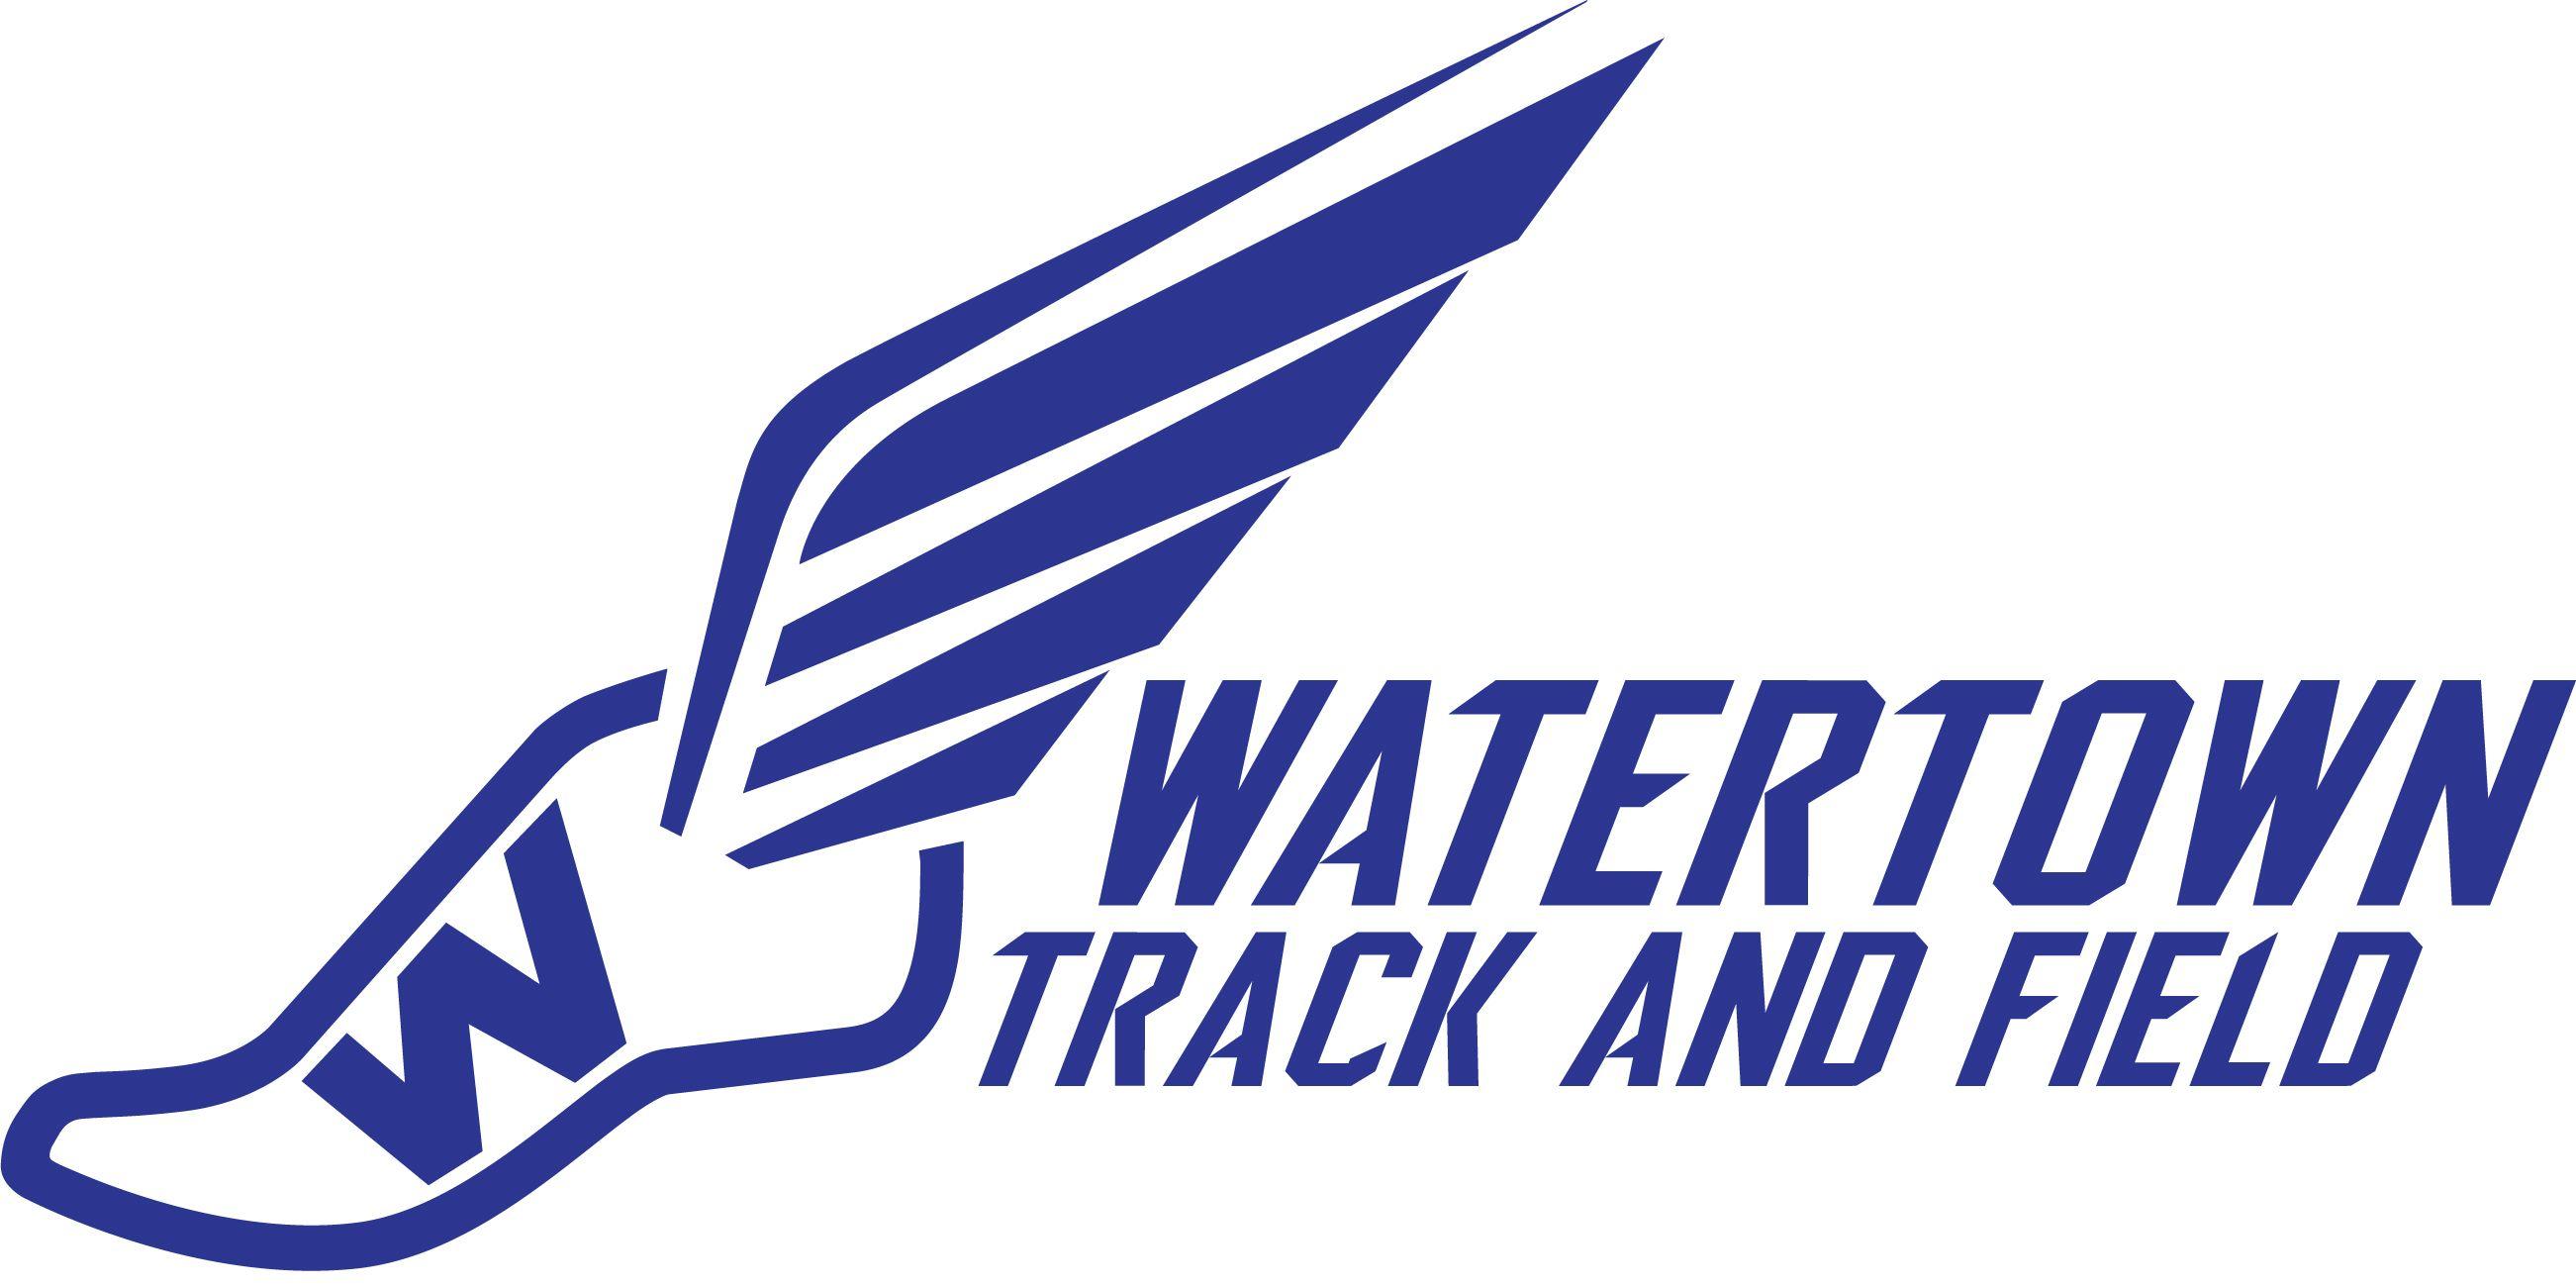 Track Foot Logo - Winged foot Logos